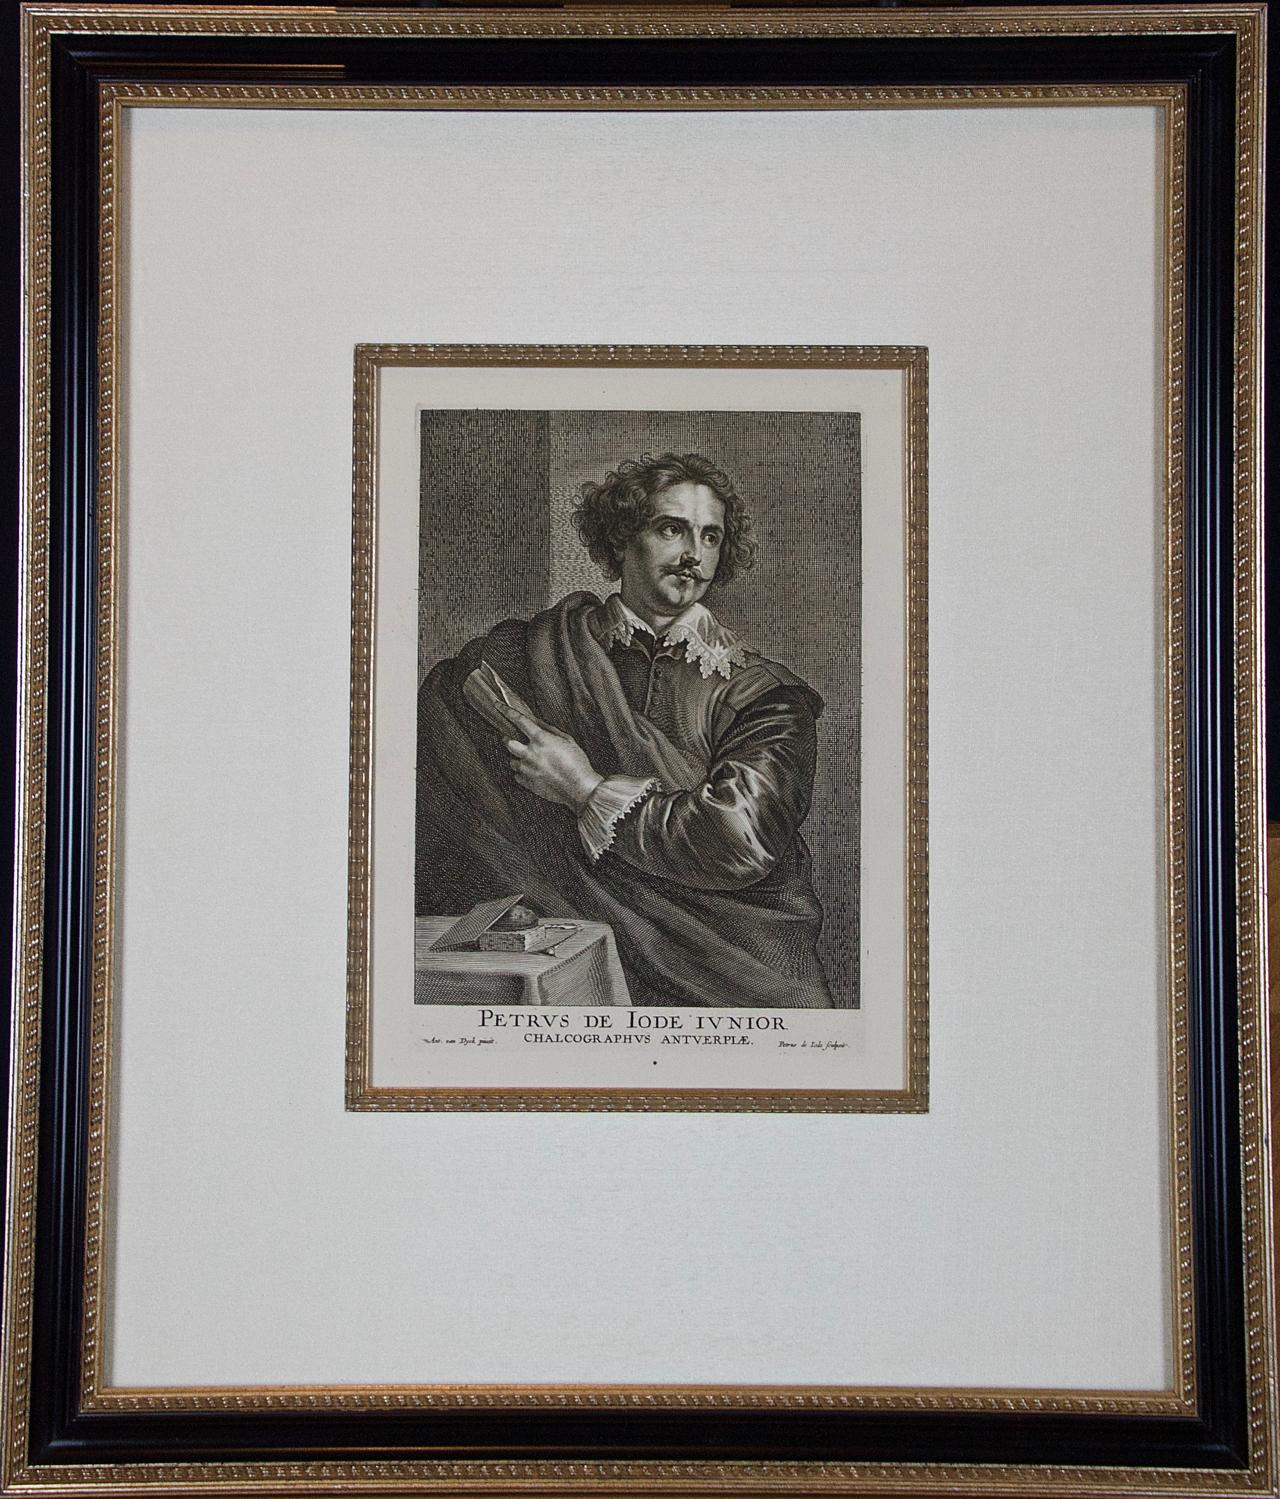 (After) Anthony Van Dyck Print - A Framed Portrait of Old Master Artist Petrus de Jode by Anthony van Dyck